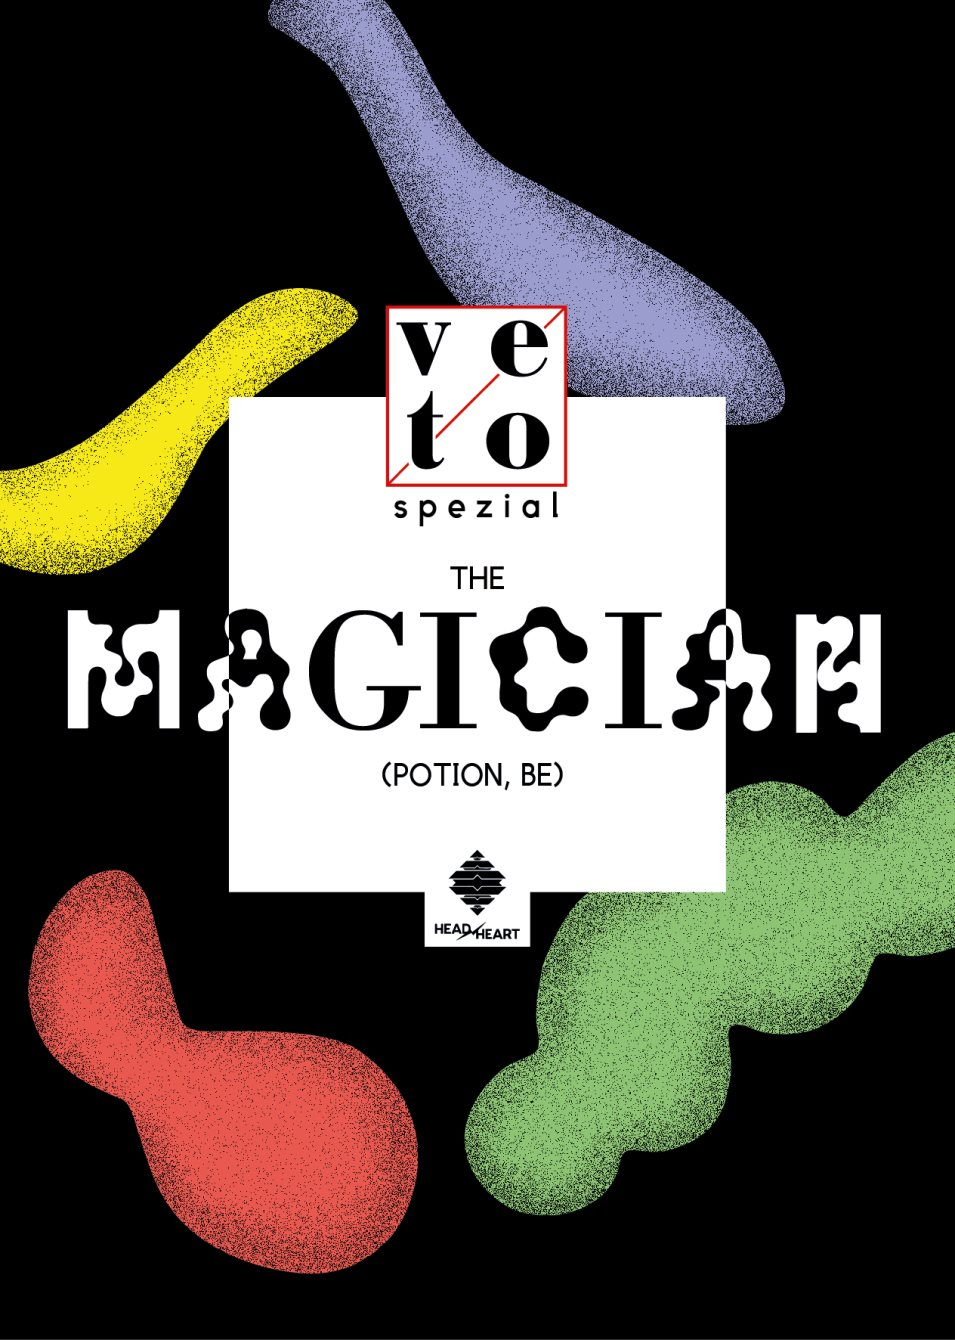 Veto Spezial - The Magician presents Potion - Flyer front